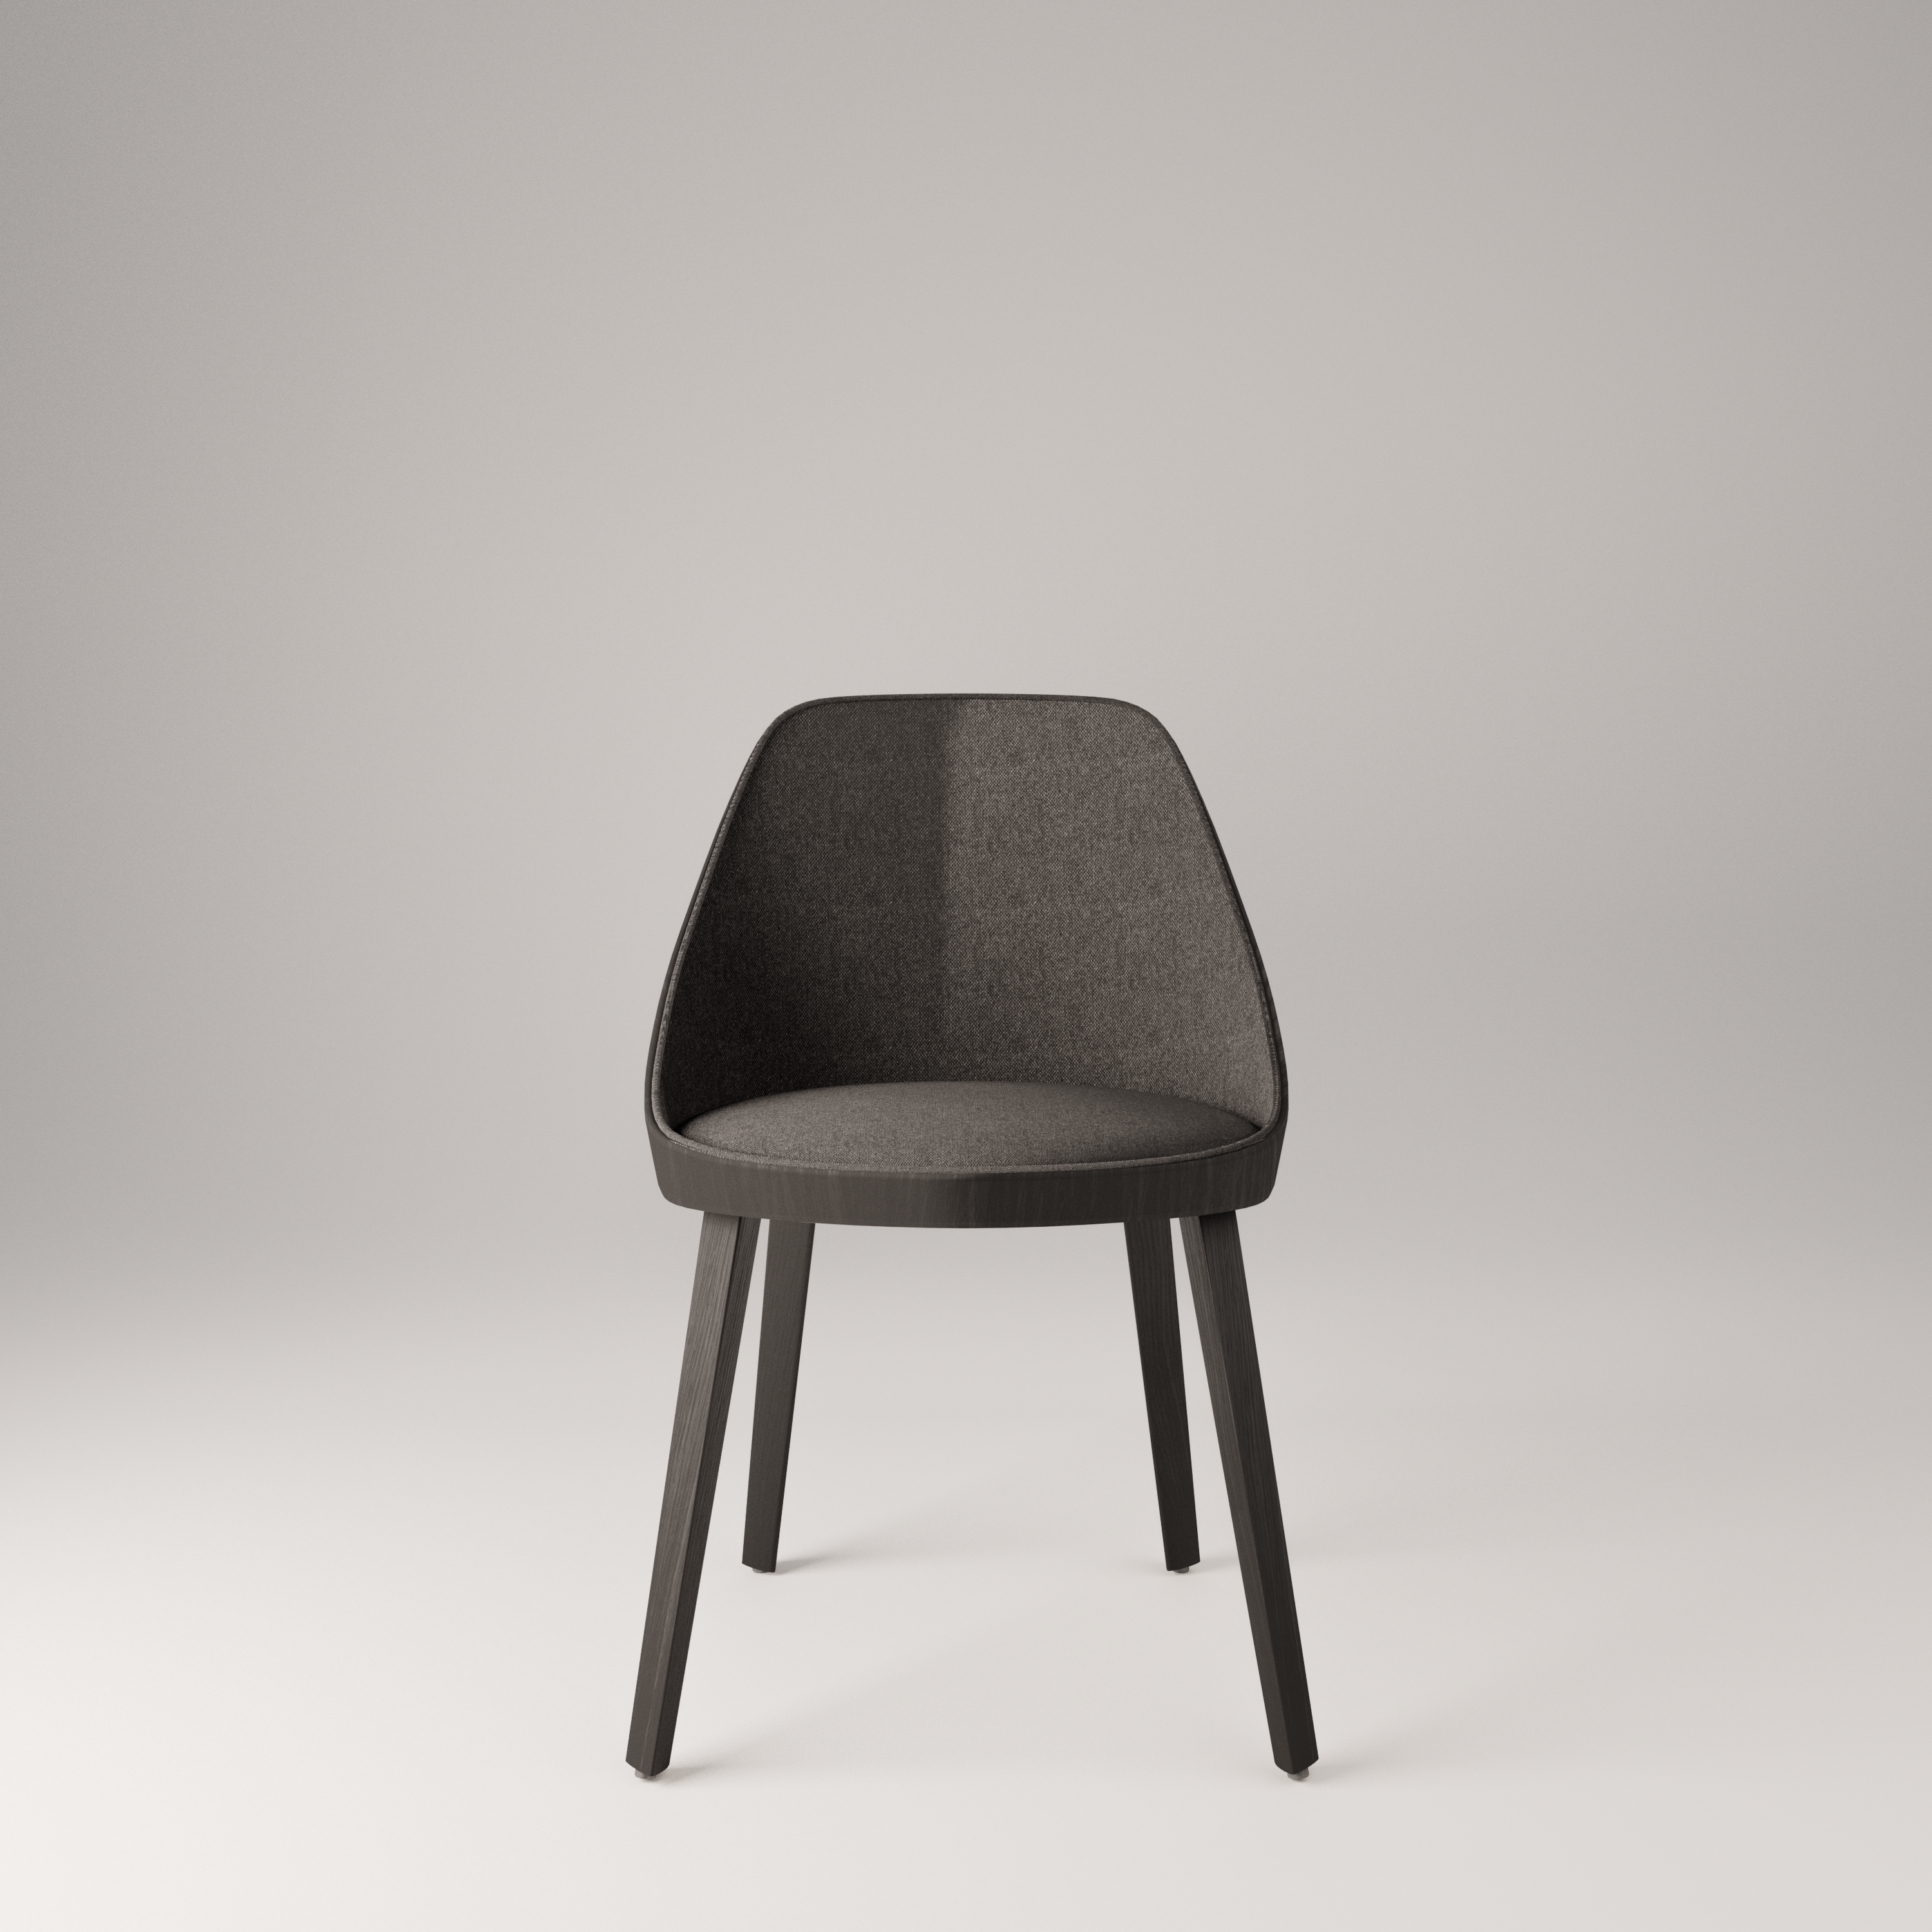 Kaiak wooden chair, gray inside, back and legs black oak